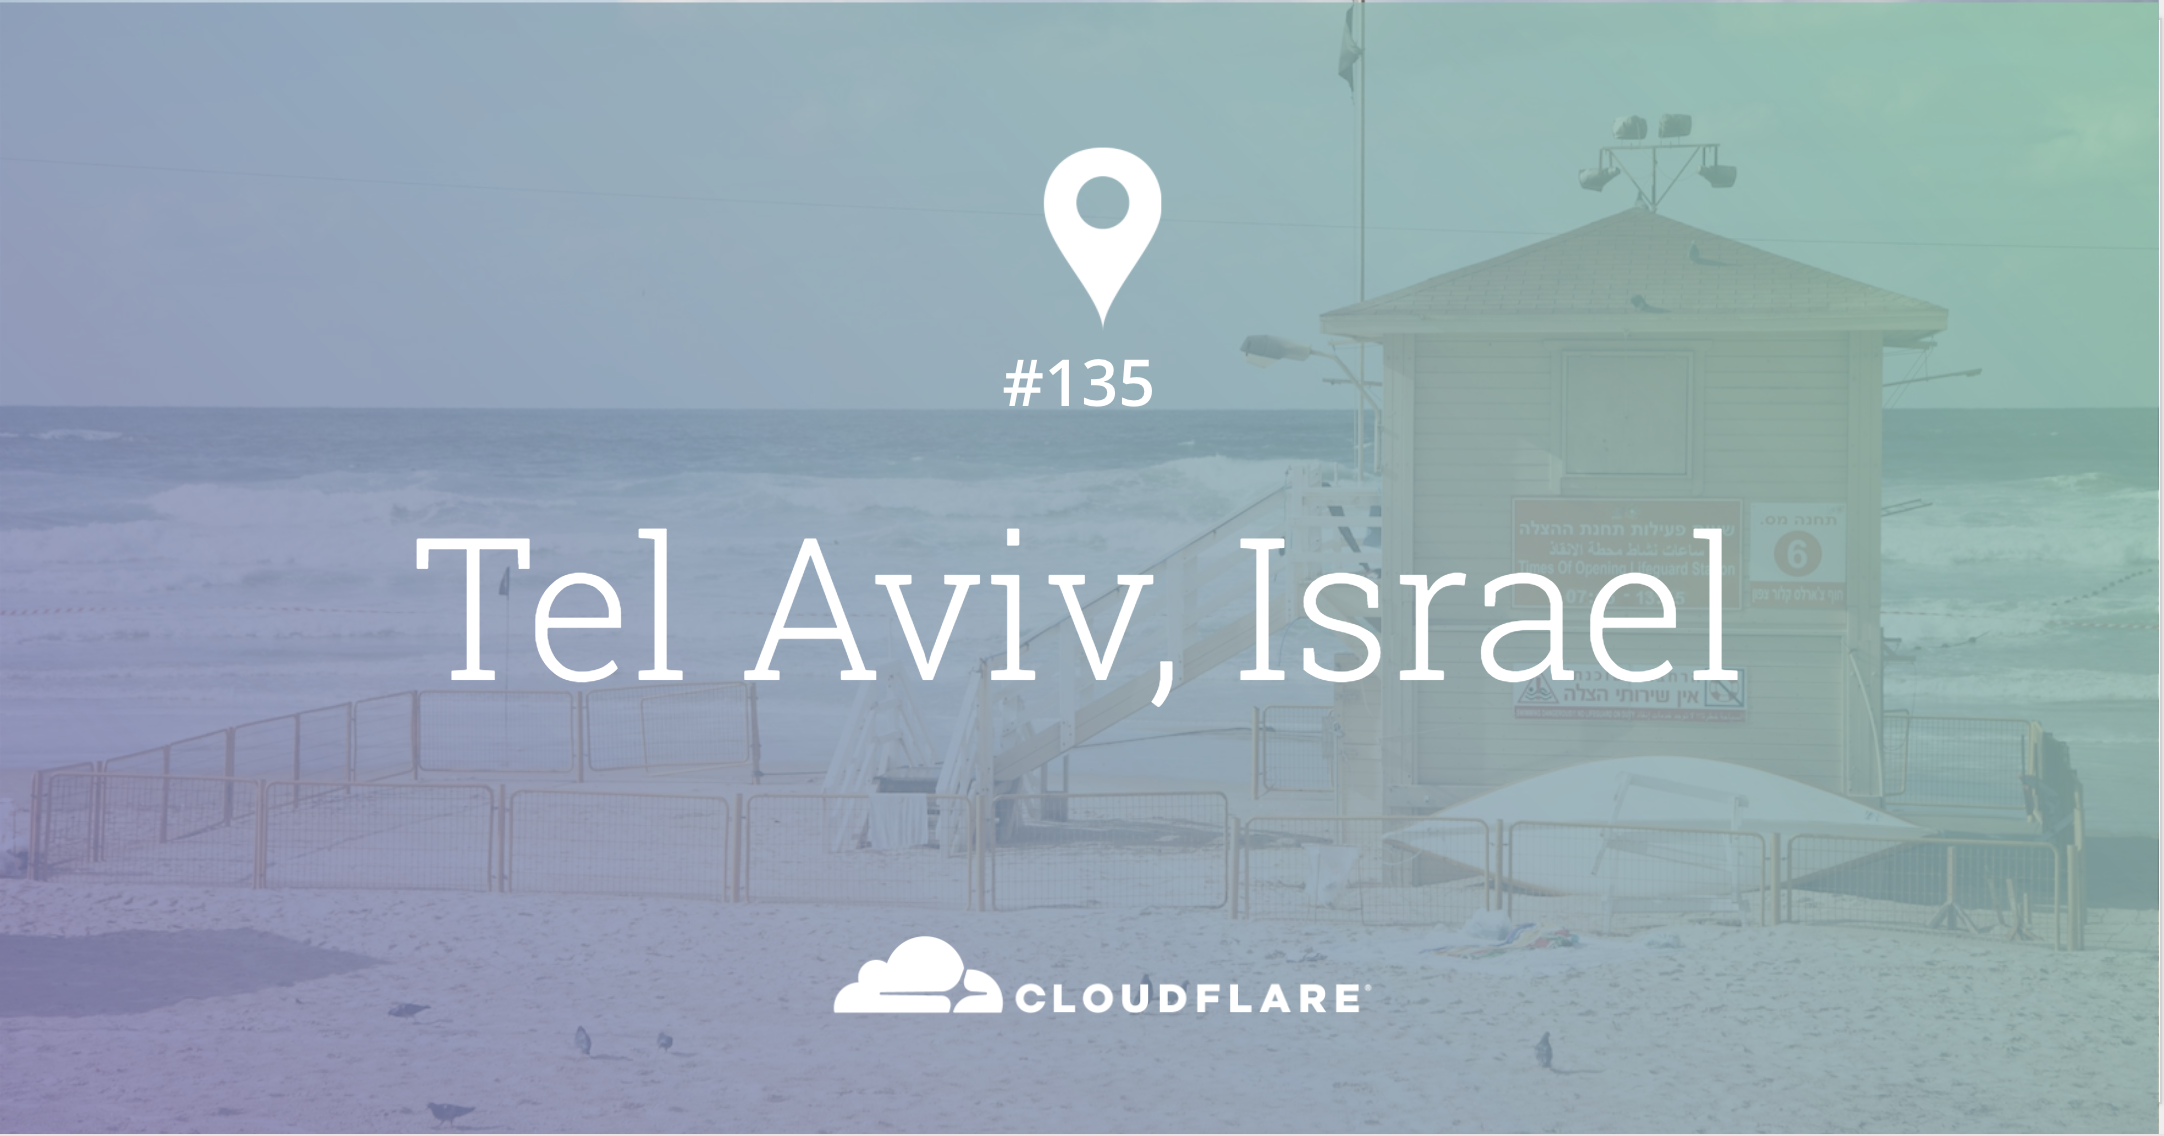 Tel Aviv, Israel: Cloudflare's 135th Data Center Now Live!